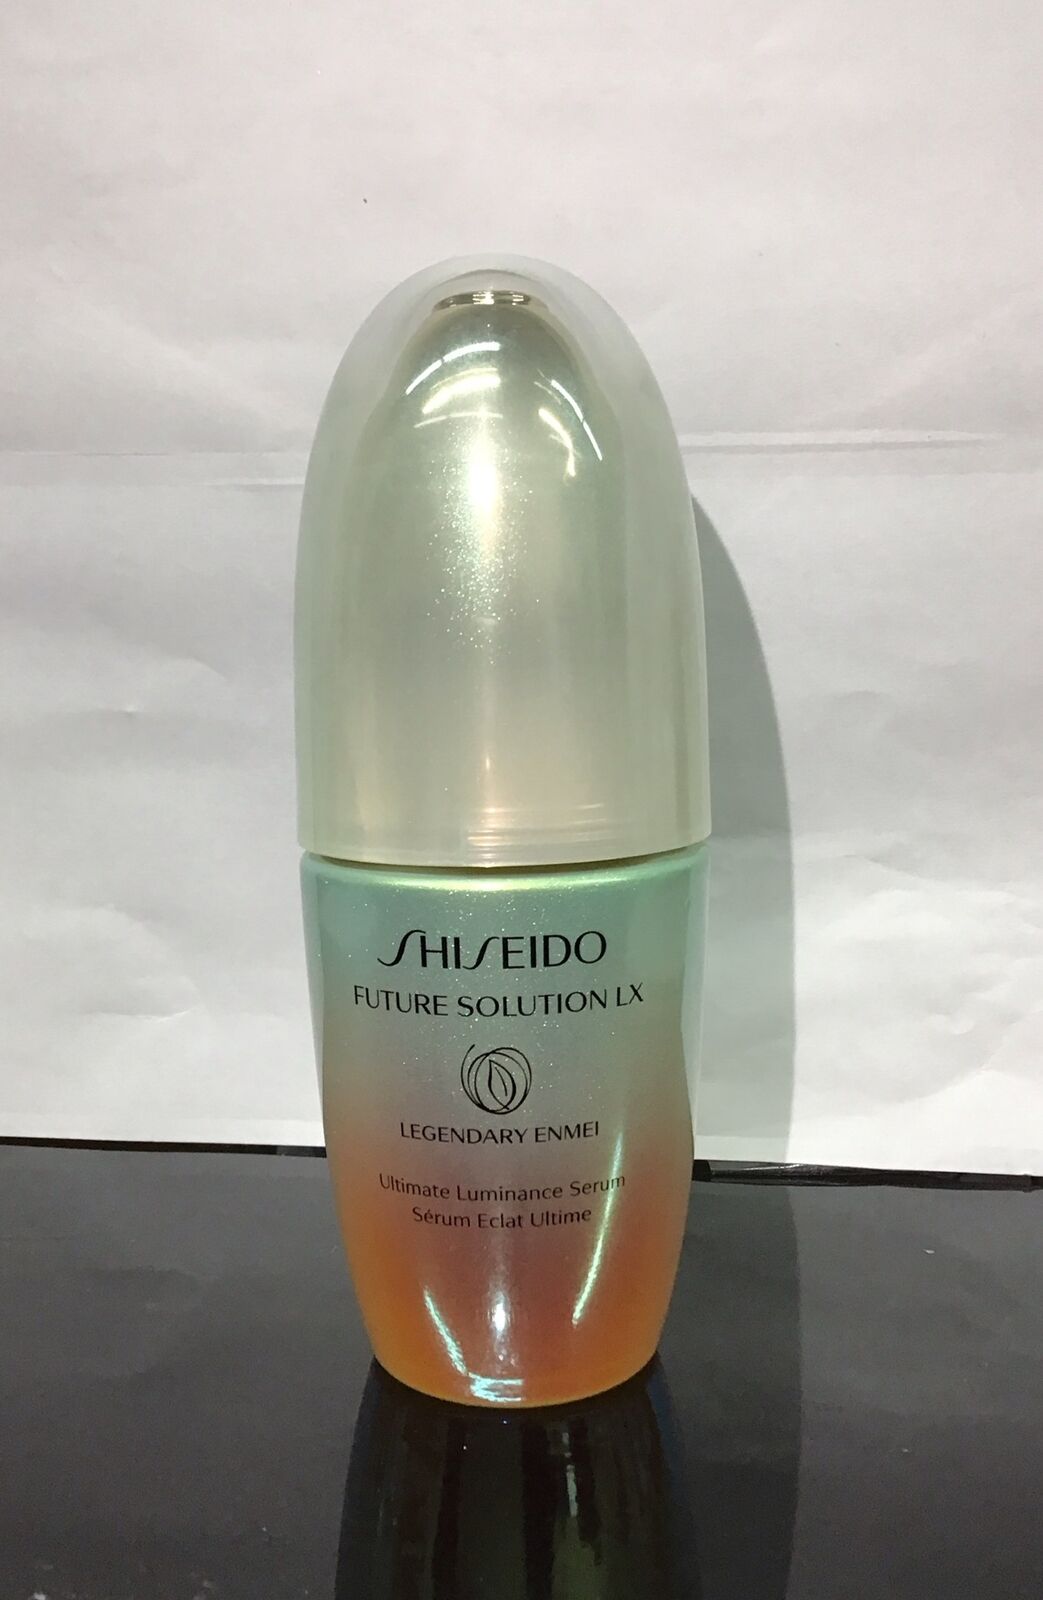 Shiseido Future Solution Lx Legendary Enmei Ultimate Luminance Serum See Descrip